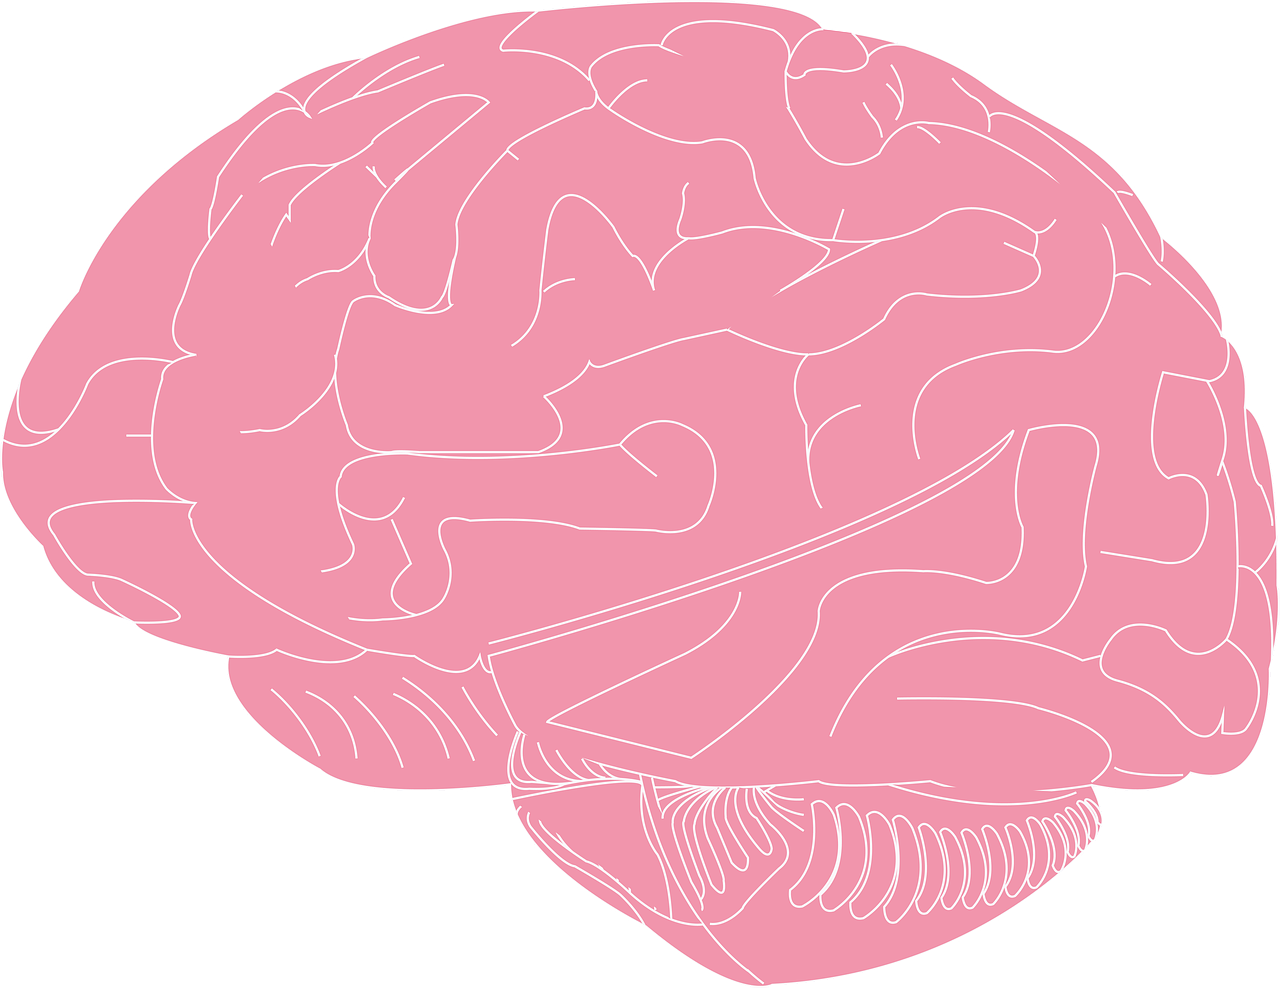 Мозг картинки для презентации. Мозг рисунок. Прозрачный мозг. Мозги вектор.